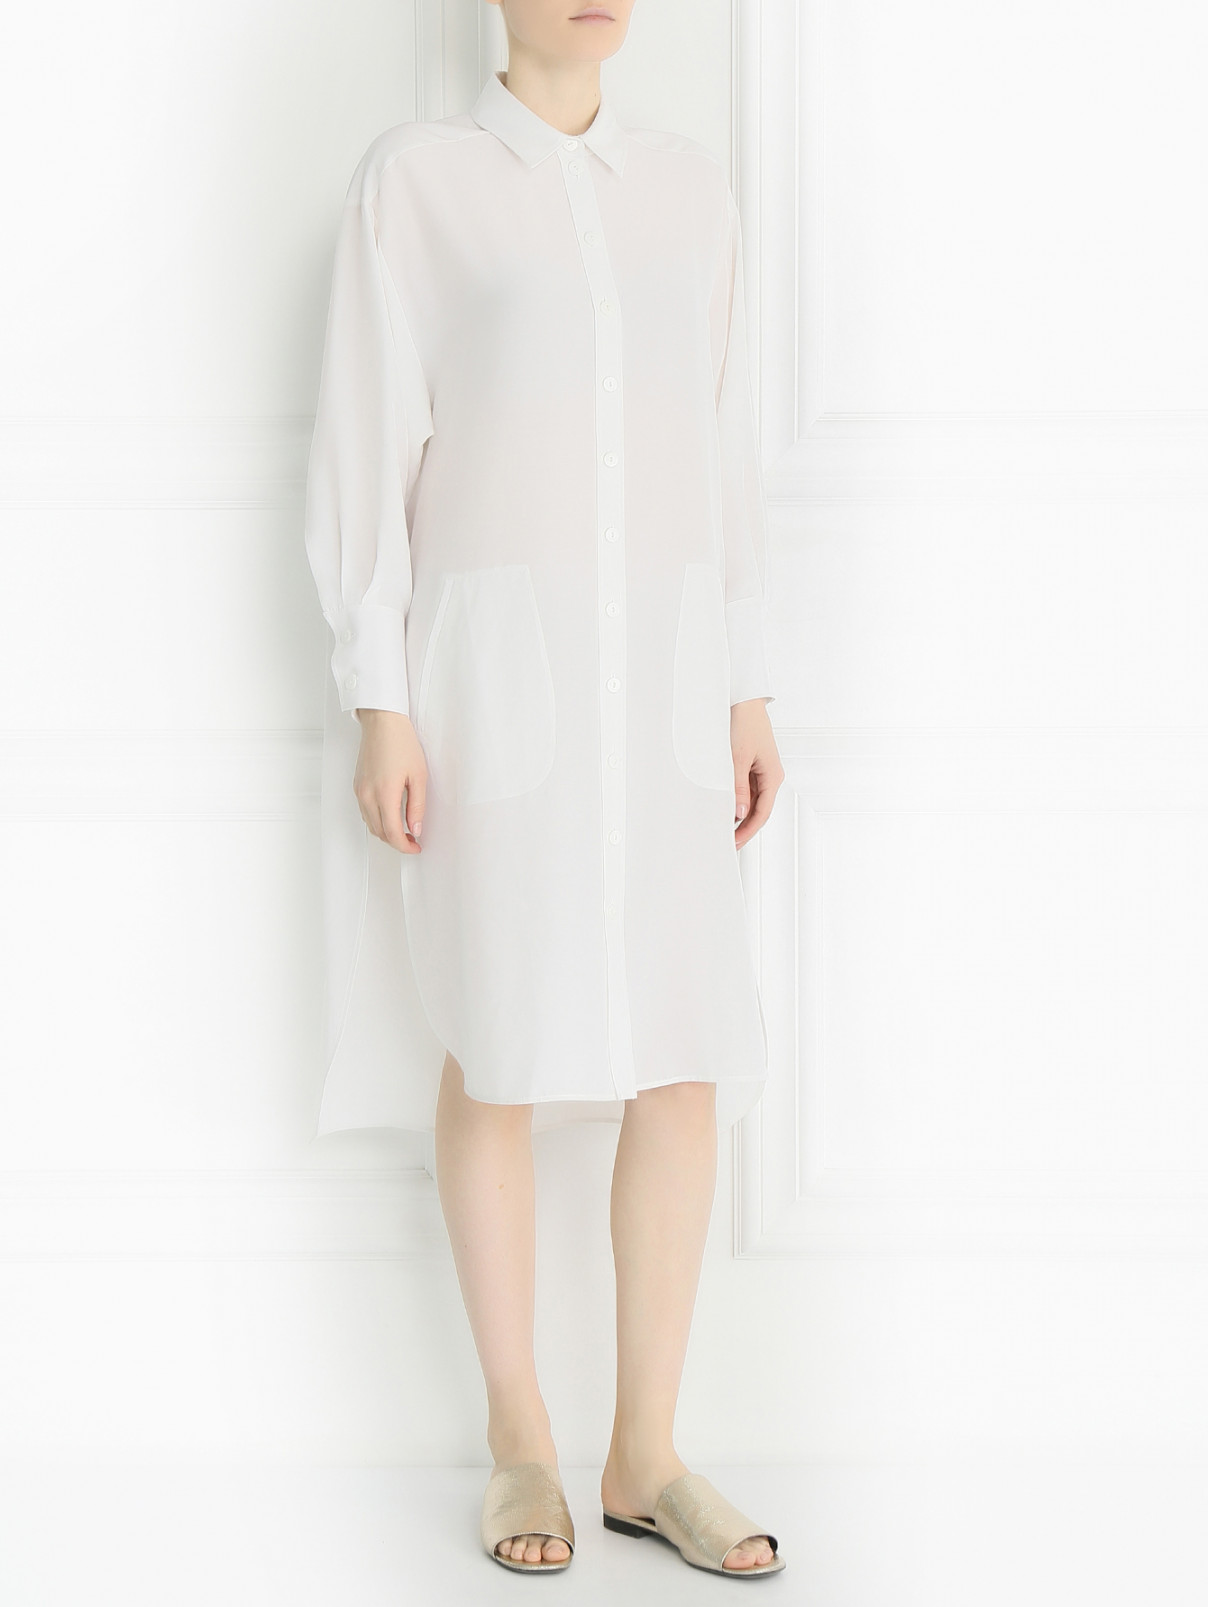 Платье-рубашка из шелка Alberta Ferretti  –  Модель Общий вид  – Цвет:  Белый